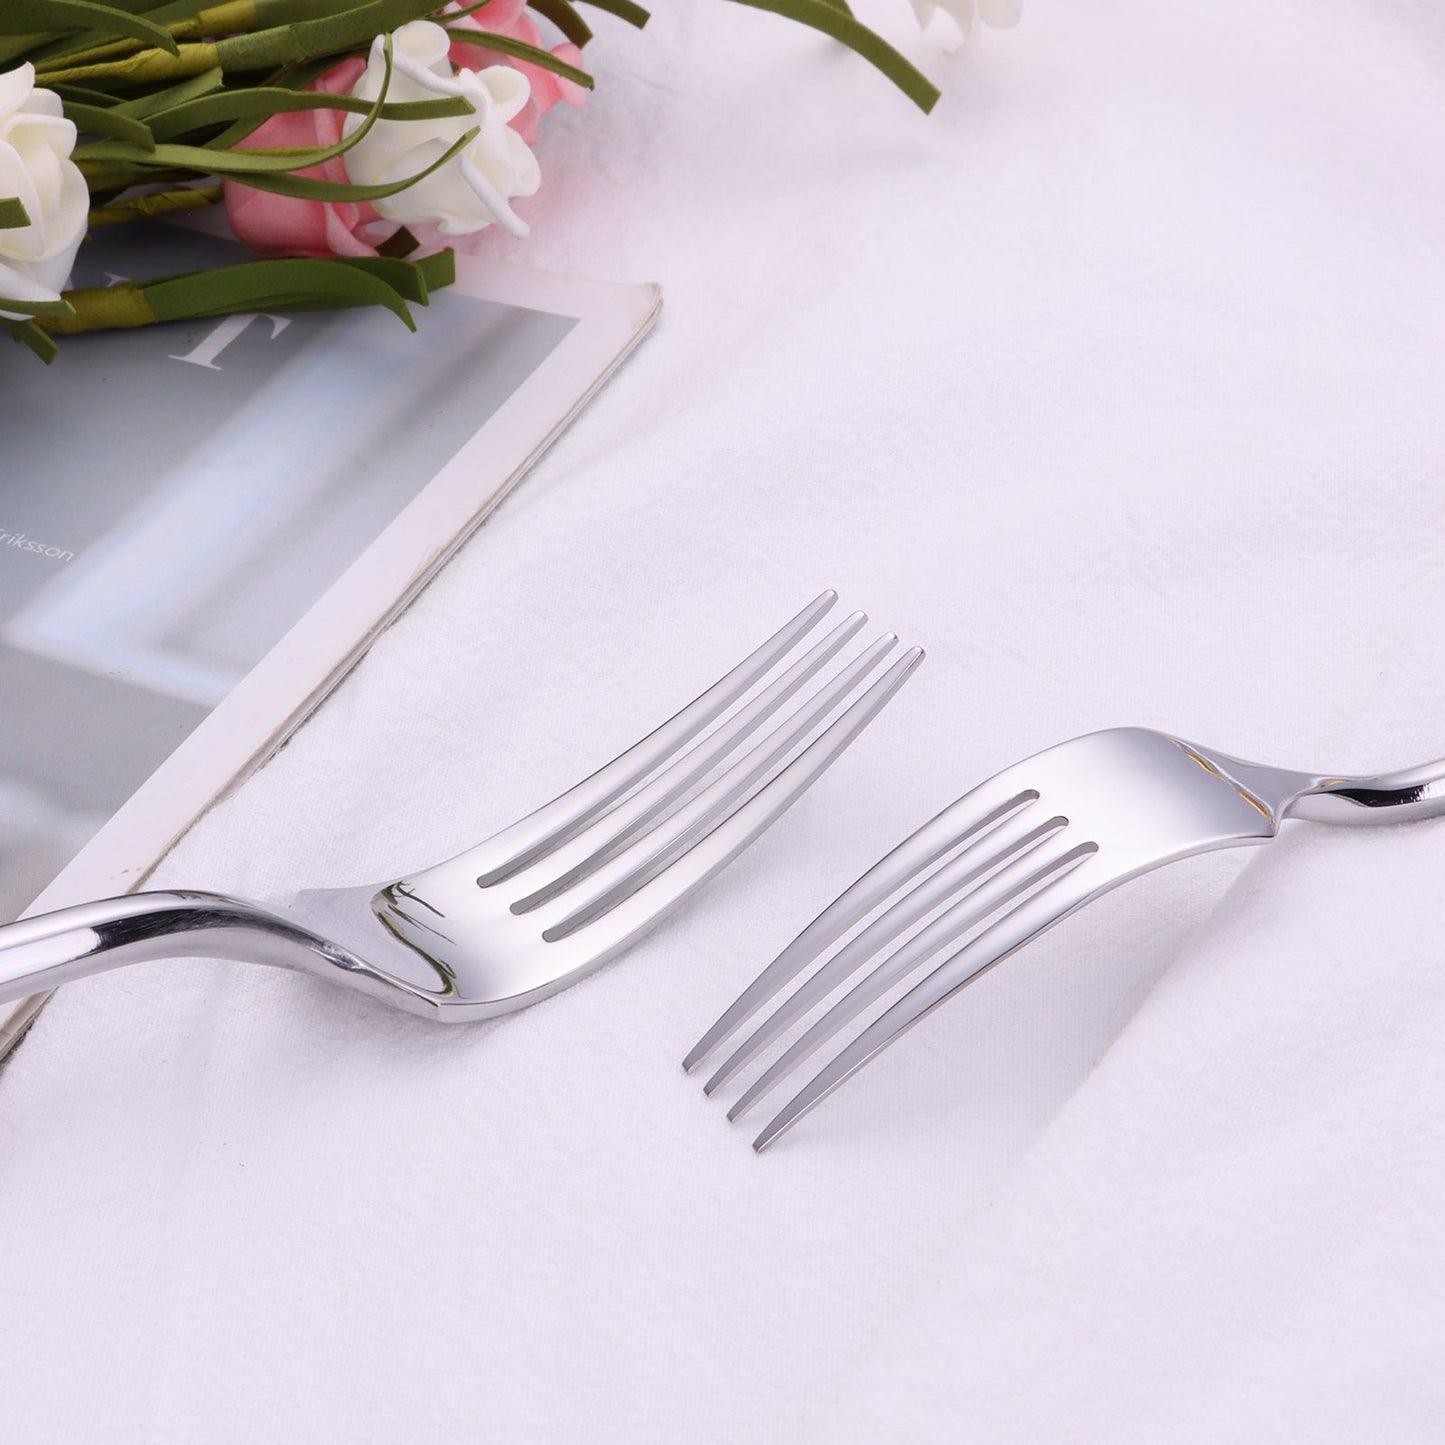 Vaikon Luxury Cutlery Set in Matte Silver by Monarque